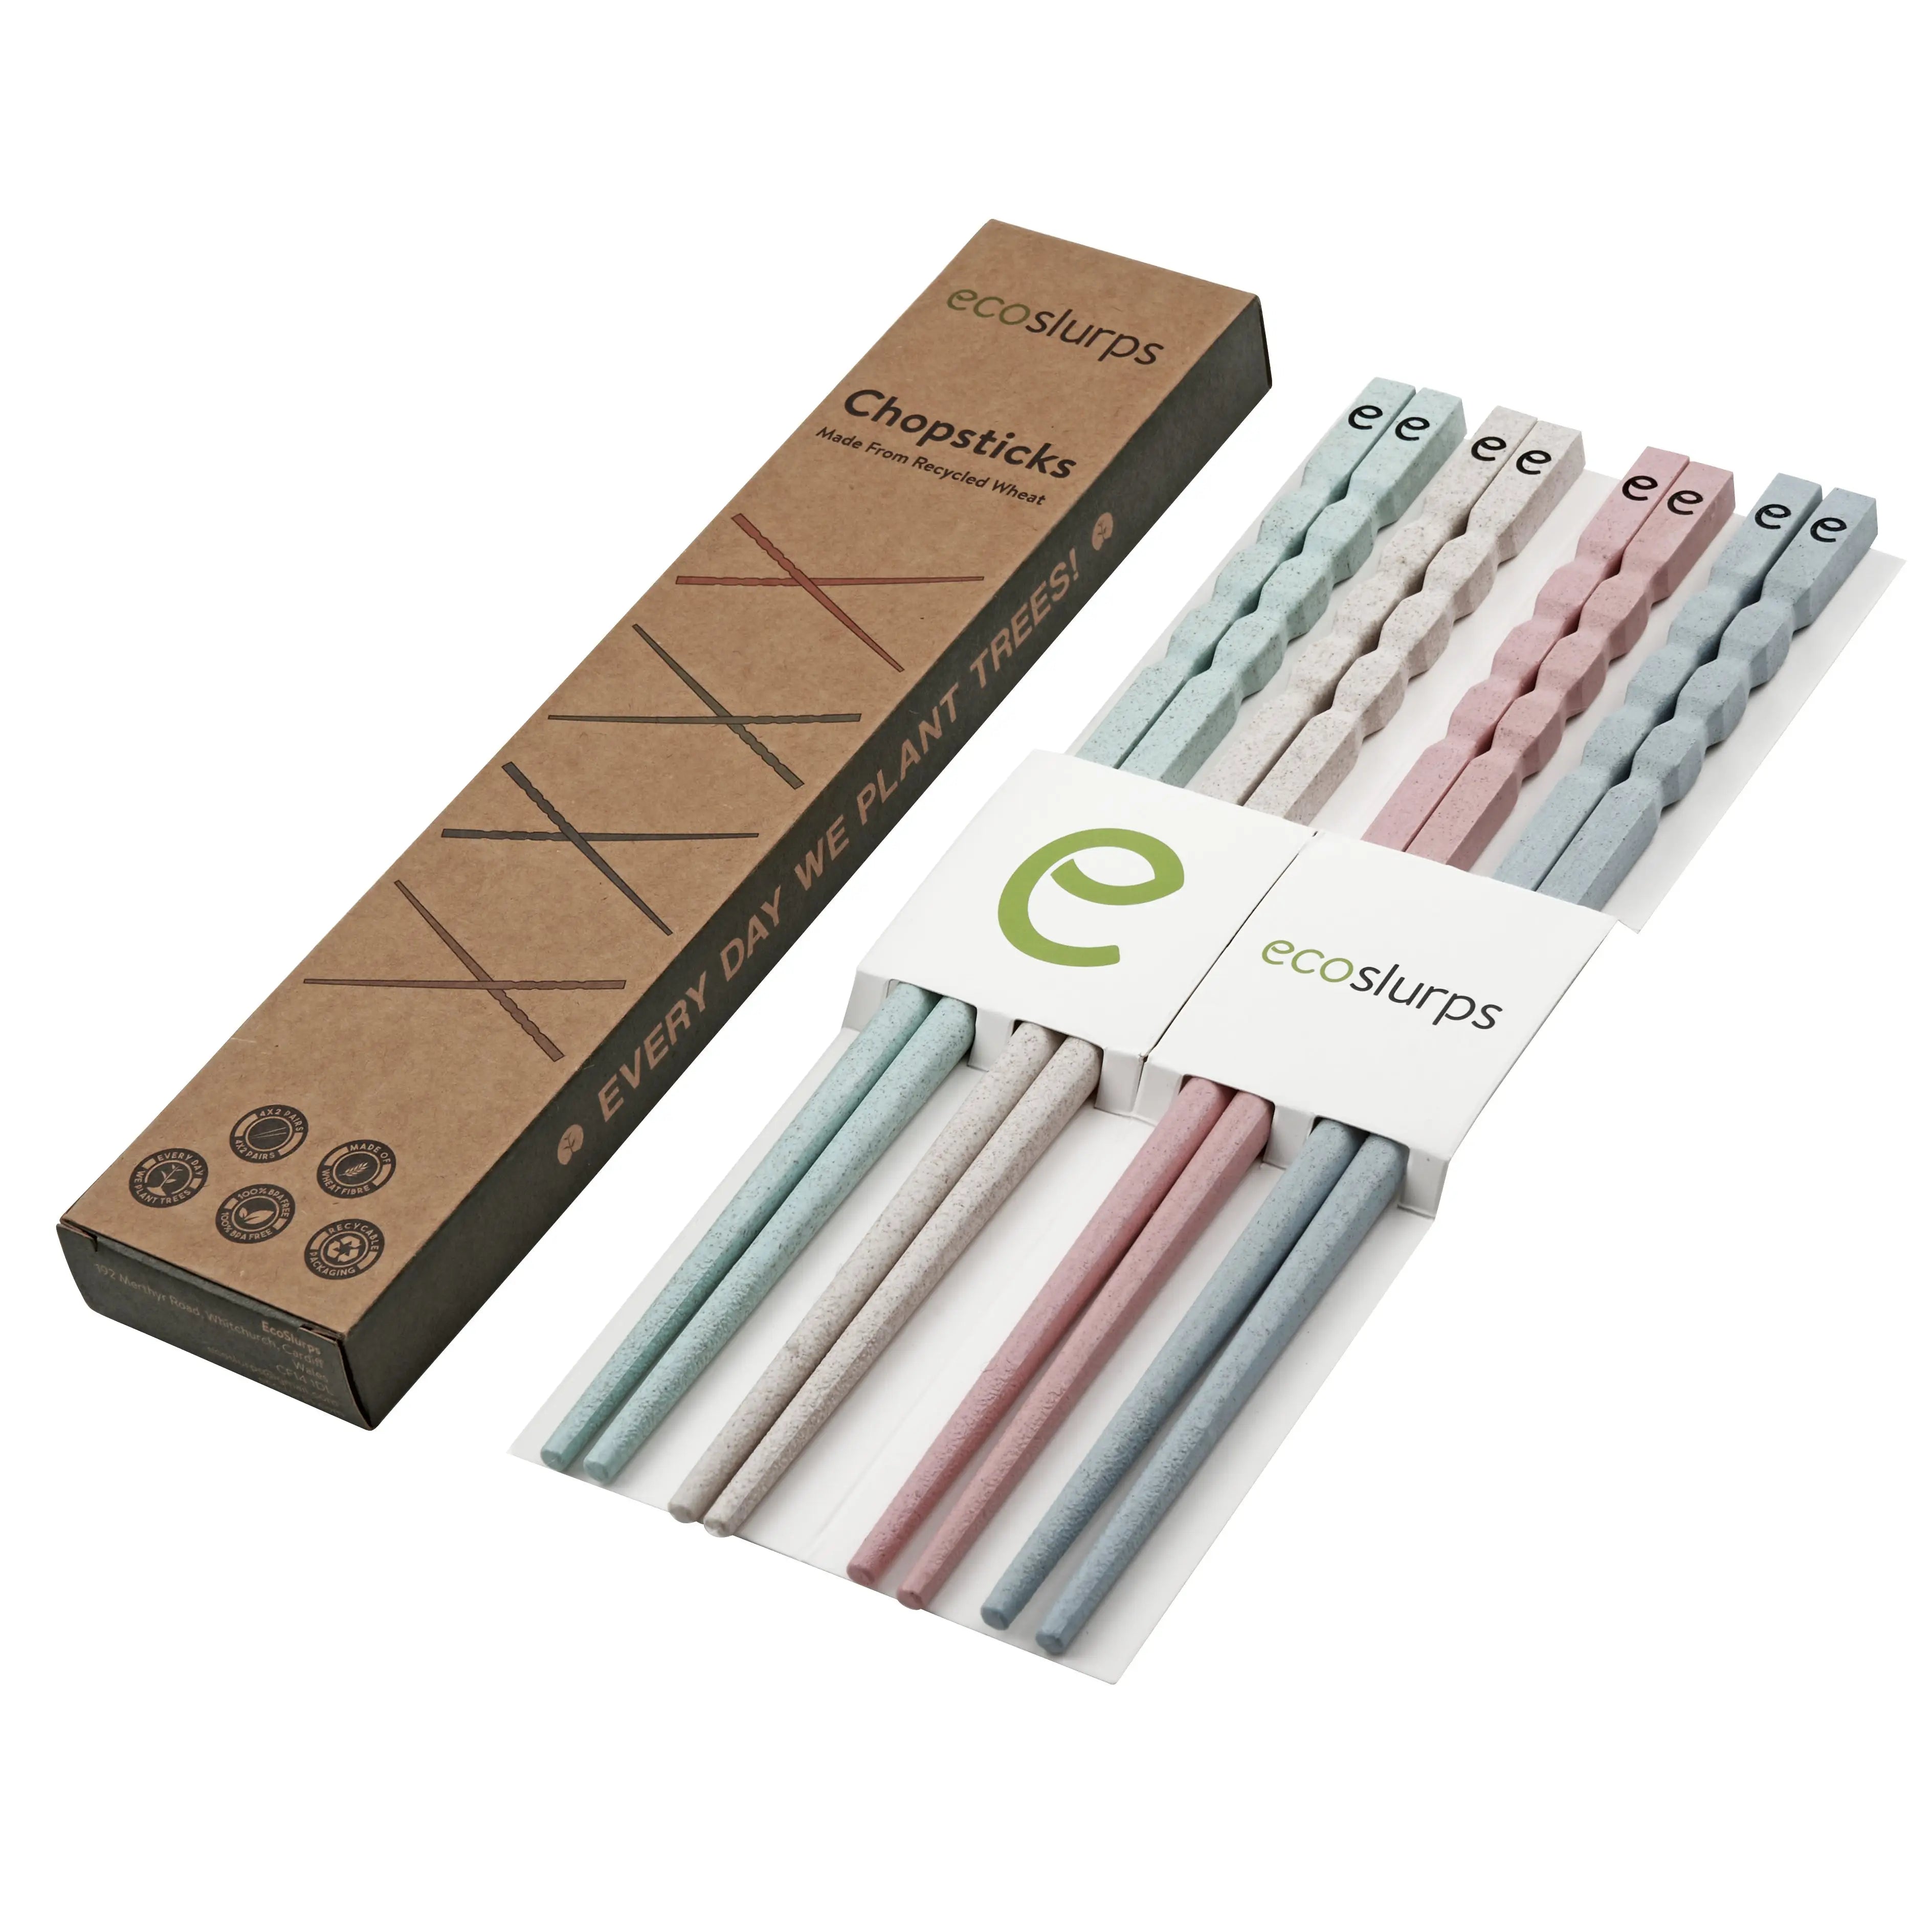 Eco Slurps | Reusable Chopsticks, Utensils, Eco Slurps, Defiance Outdoor Gear Co.